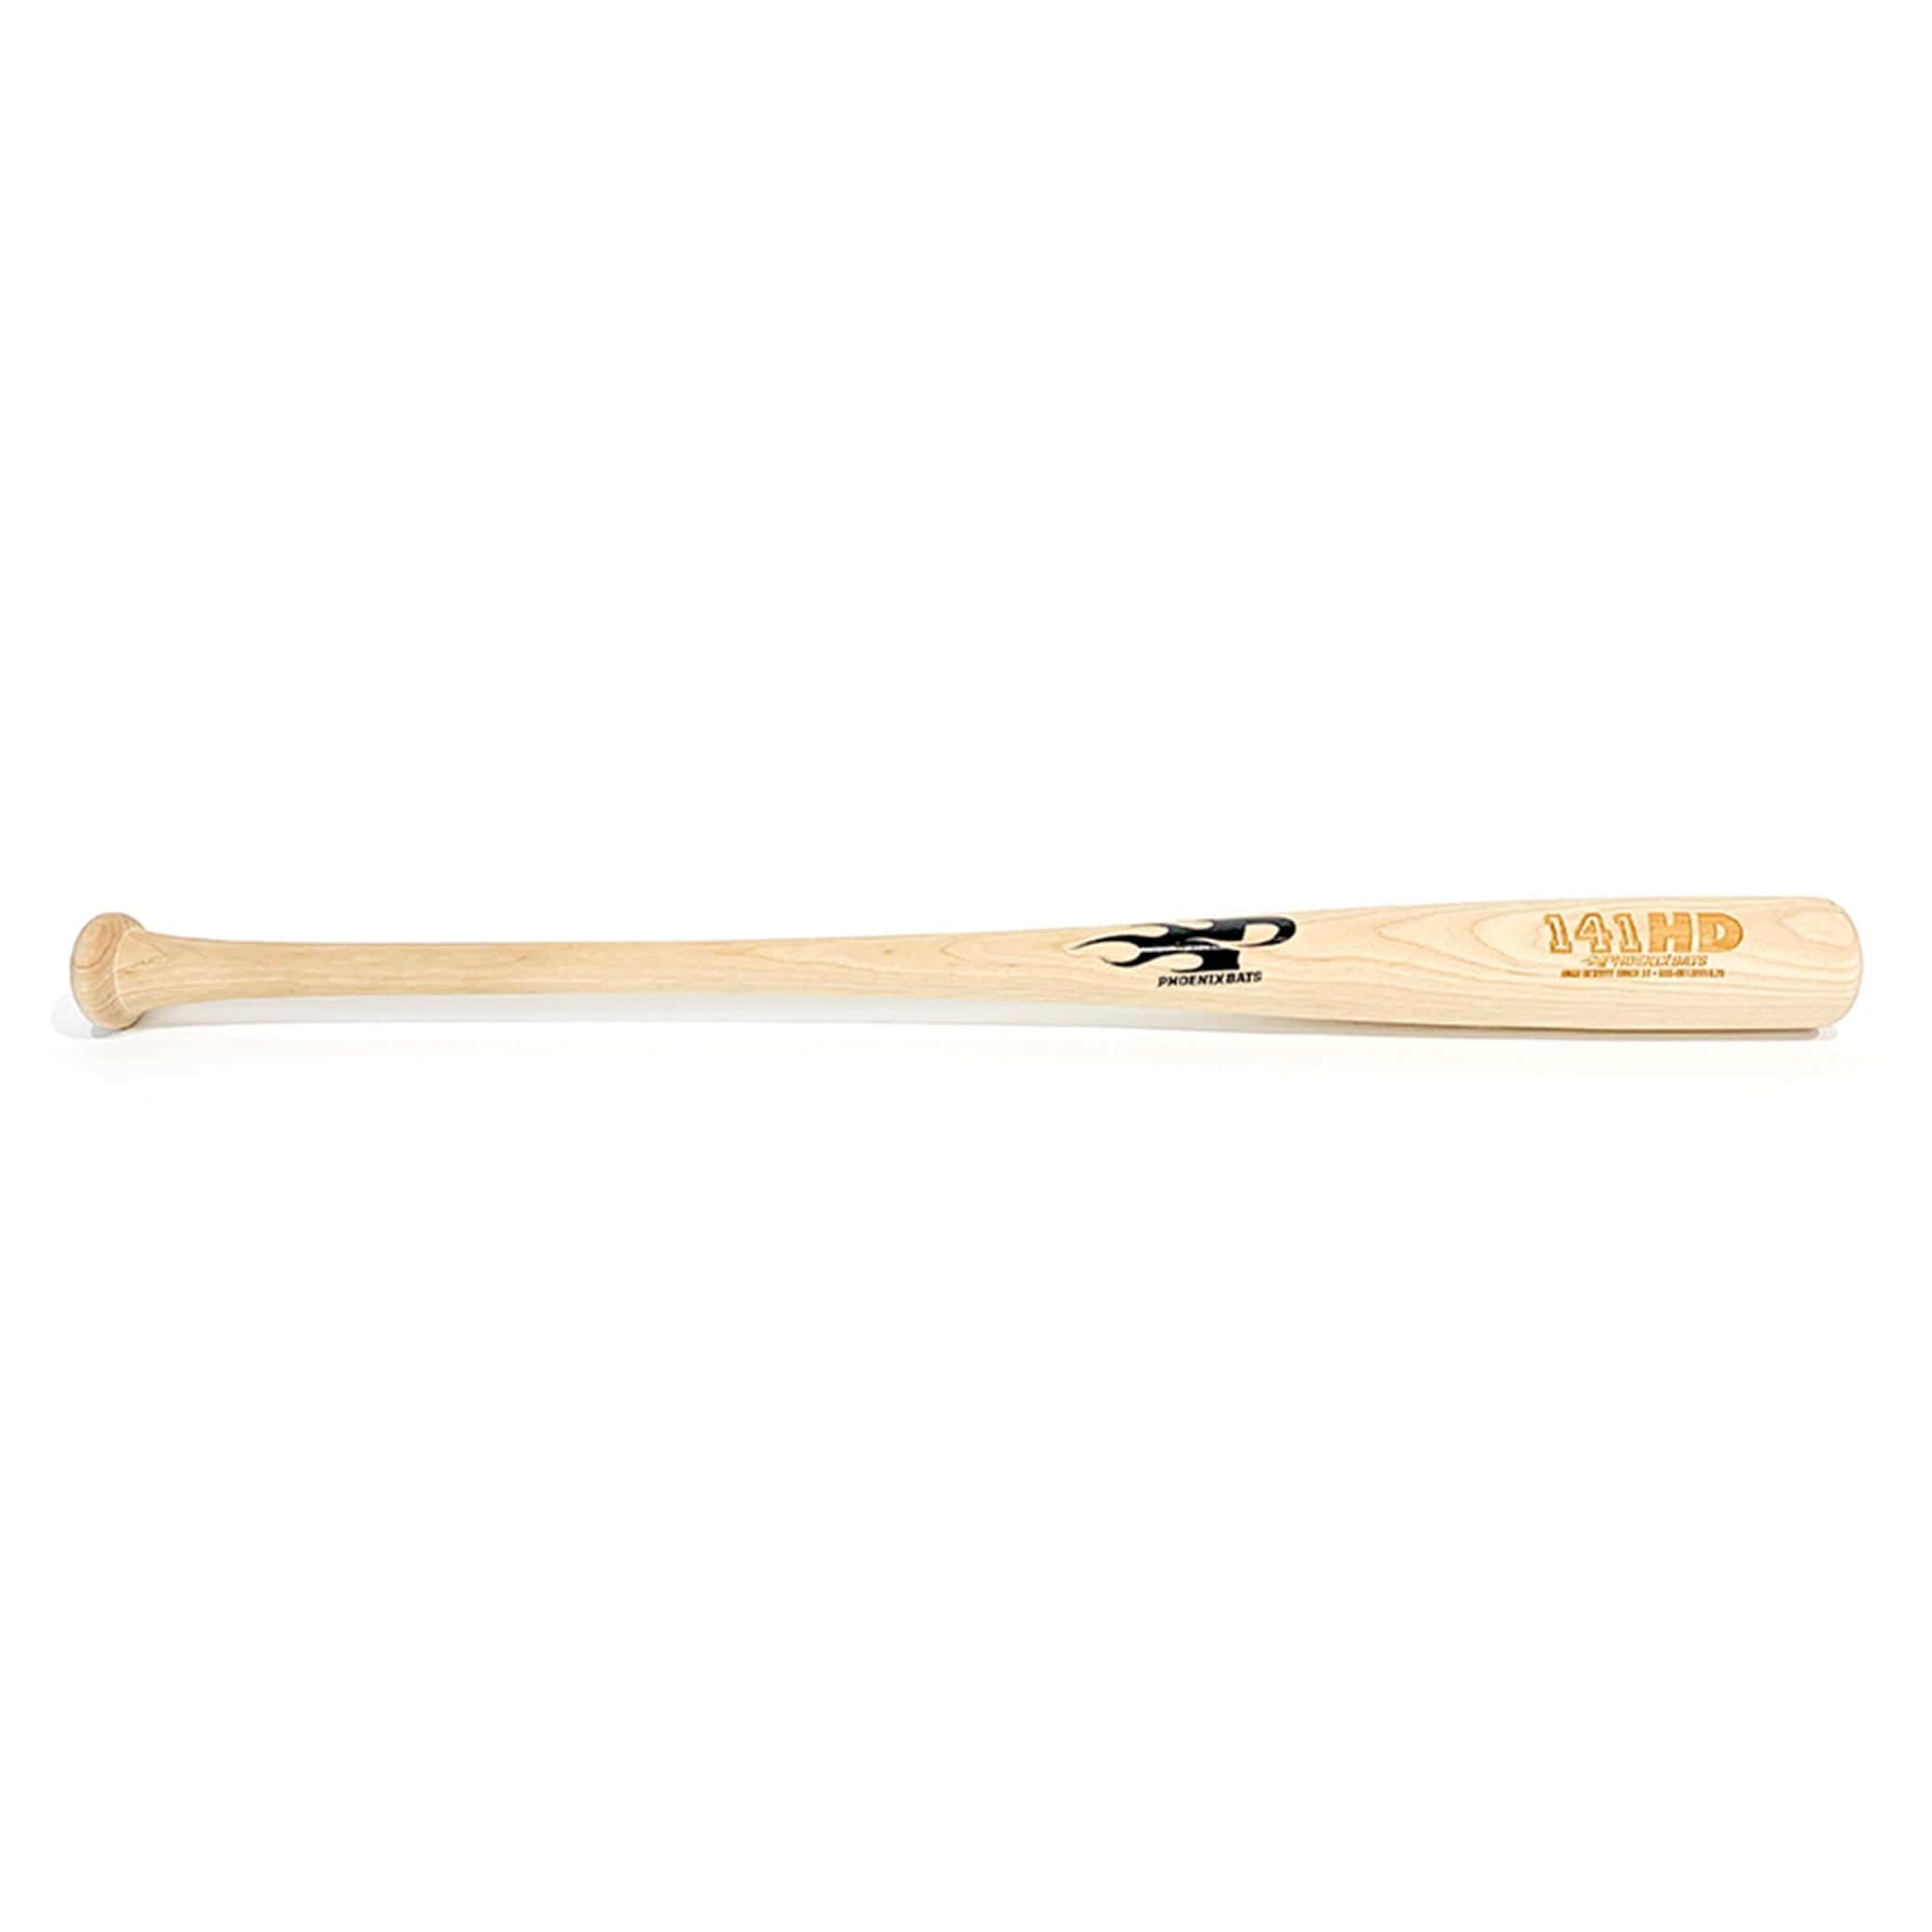 BB71 Fast Ship Wood Baseball Bat